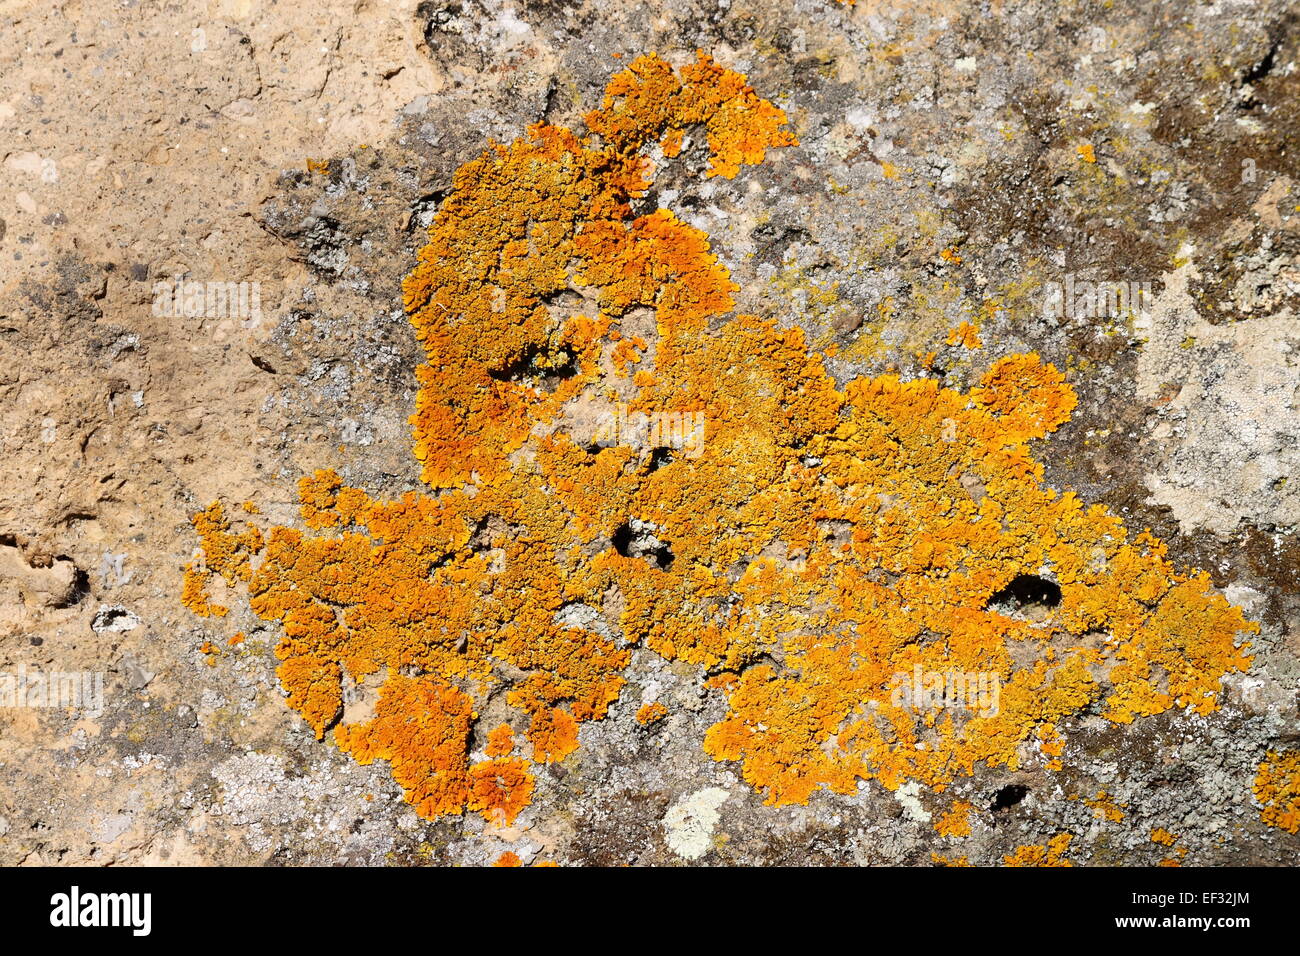 Yellowish lichens growing on light gray rock Stock Photo